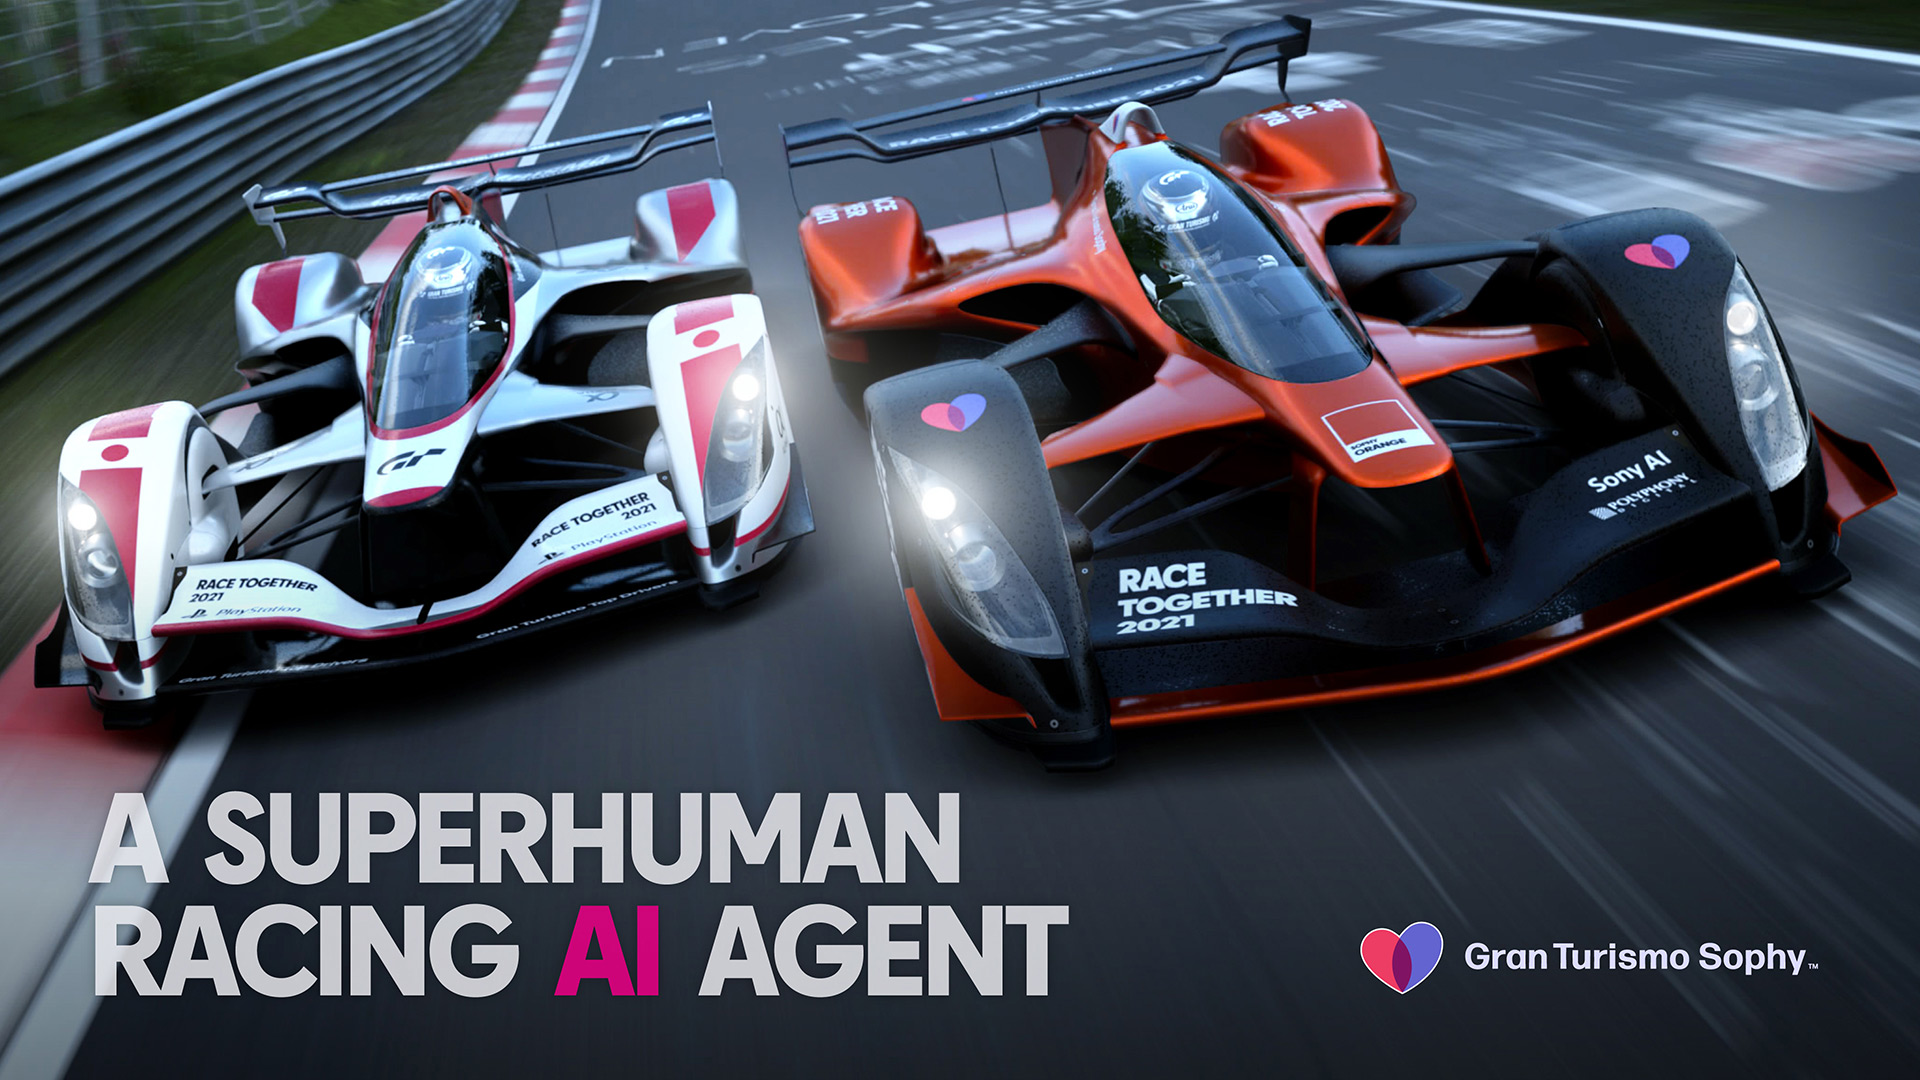 Gran Turismo Sophy: Introducing Sony's racing AI